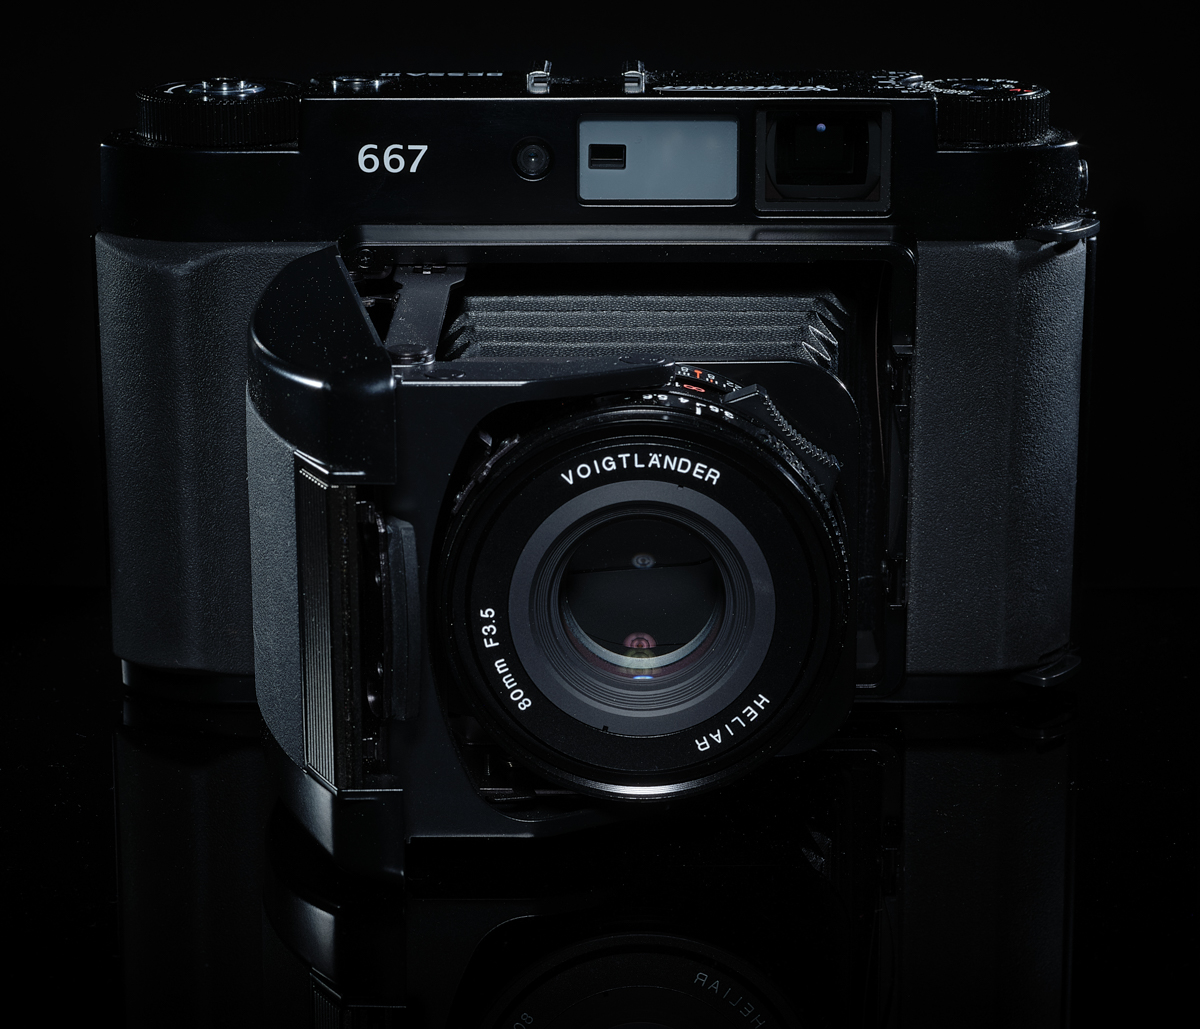 My Voigtländer Bessa III 667 with its Heliar 80mm f/3.5 lens